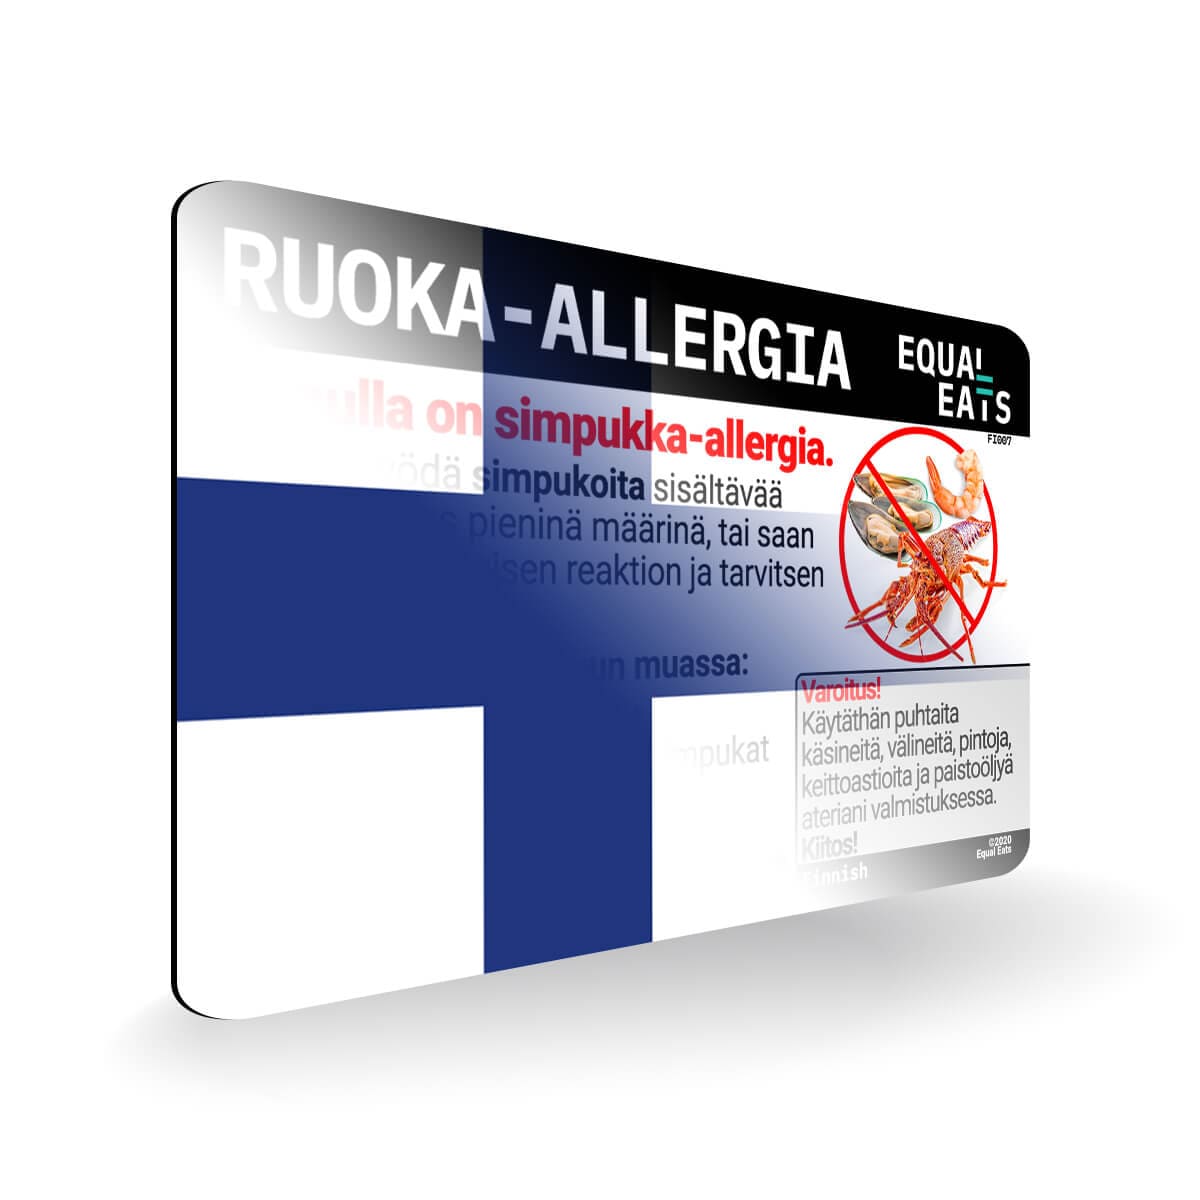 Shellfish Allergy in Finnish. Shellfish Allergy Card for Finland